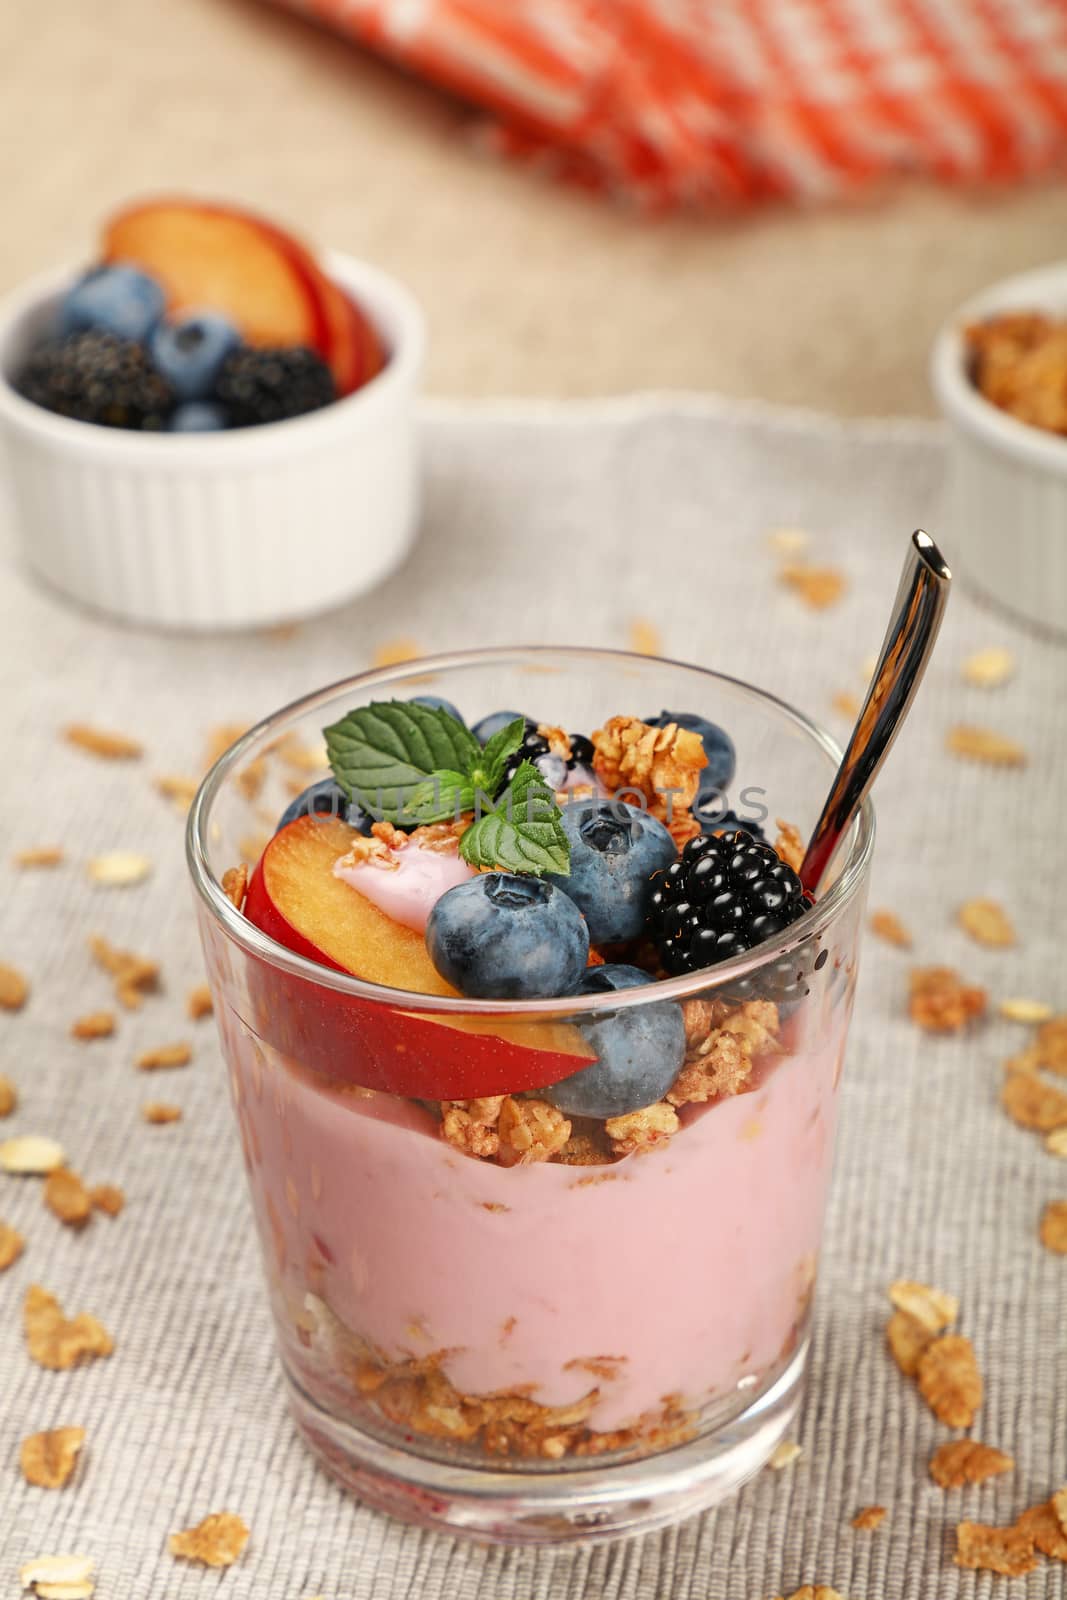 Portion of muesli granola breakfast with yogurt by BreakingTheWalls